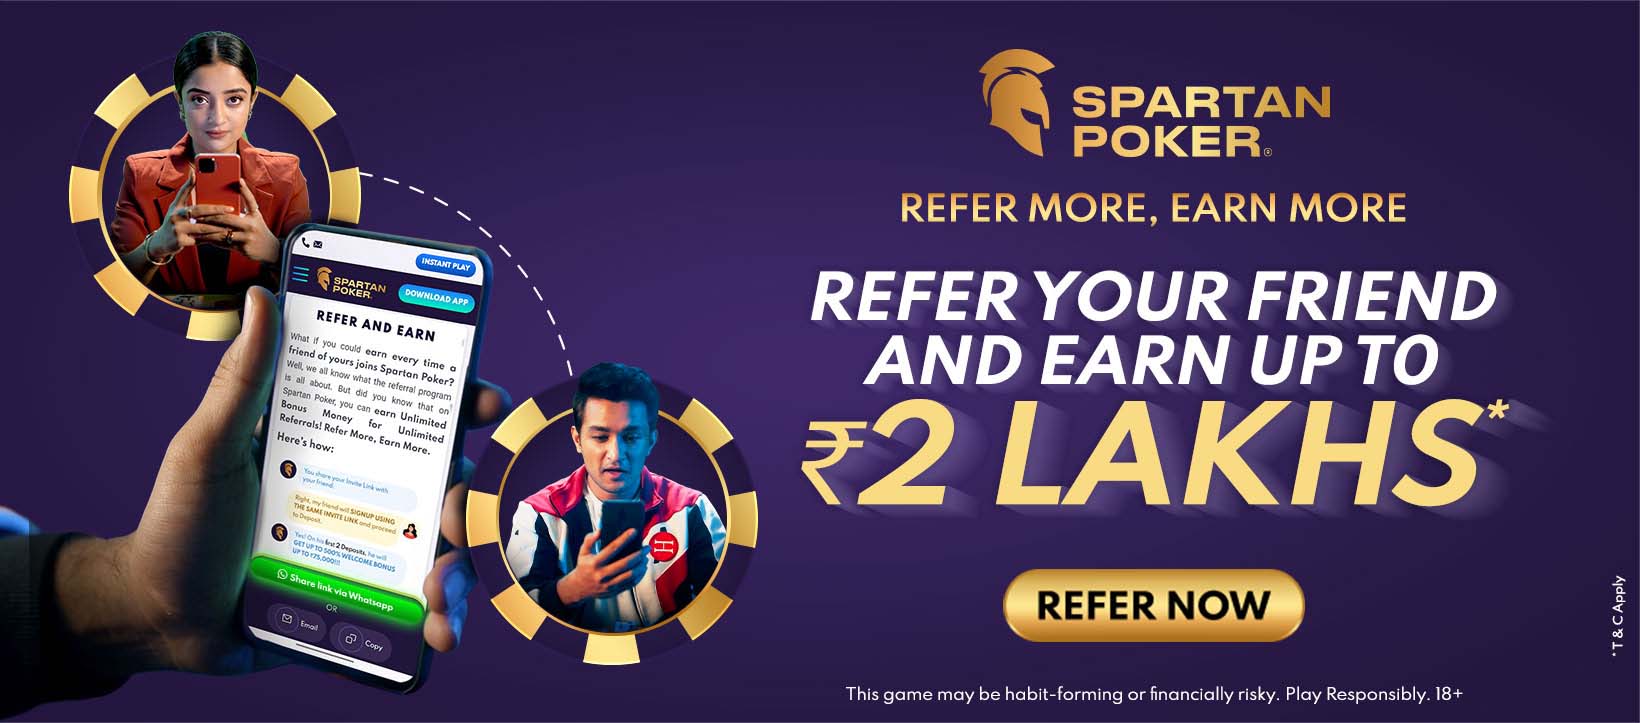 https://spartanpoker.com/poker-promotion/refer-and-earn